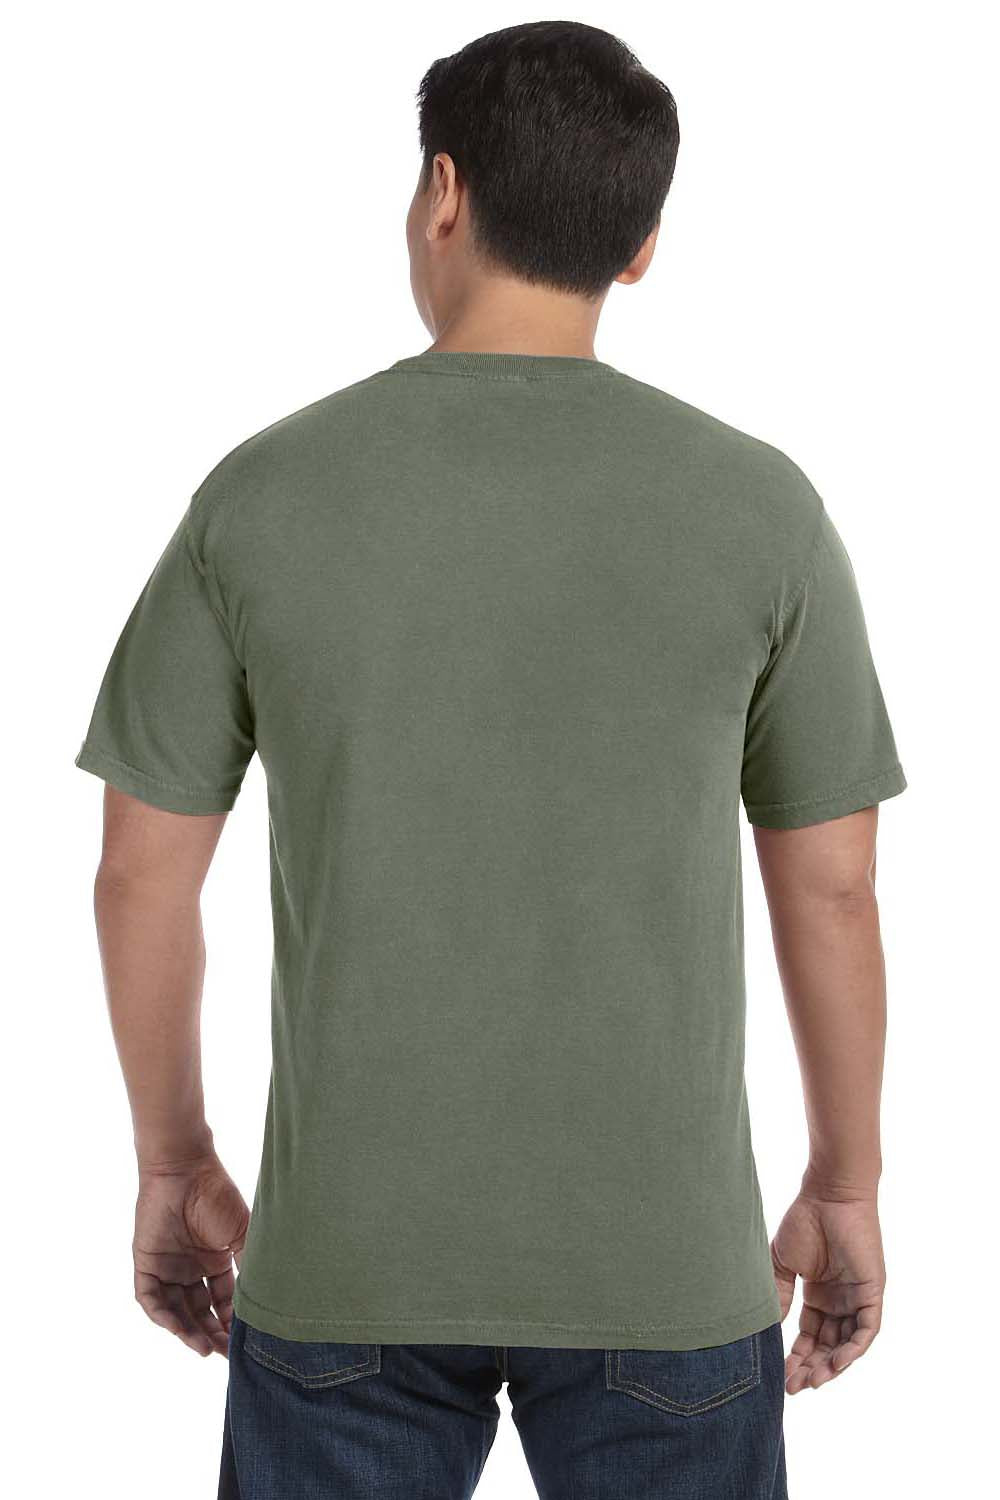 Comfort Colors C1717 Mens Short Sleeve Crewneck T-Shirt Sage Green Back